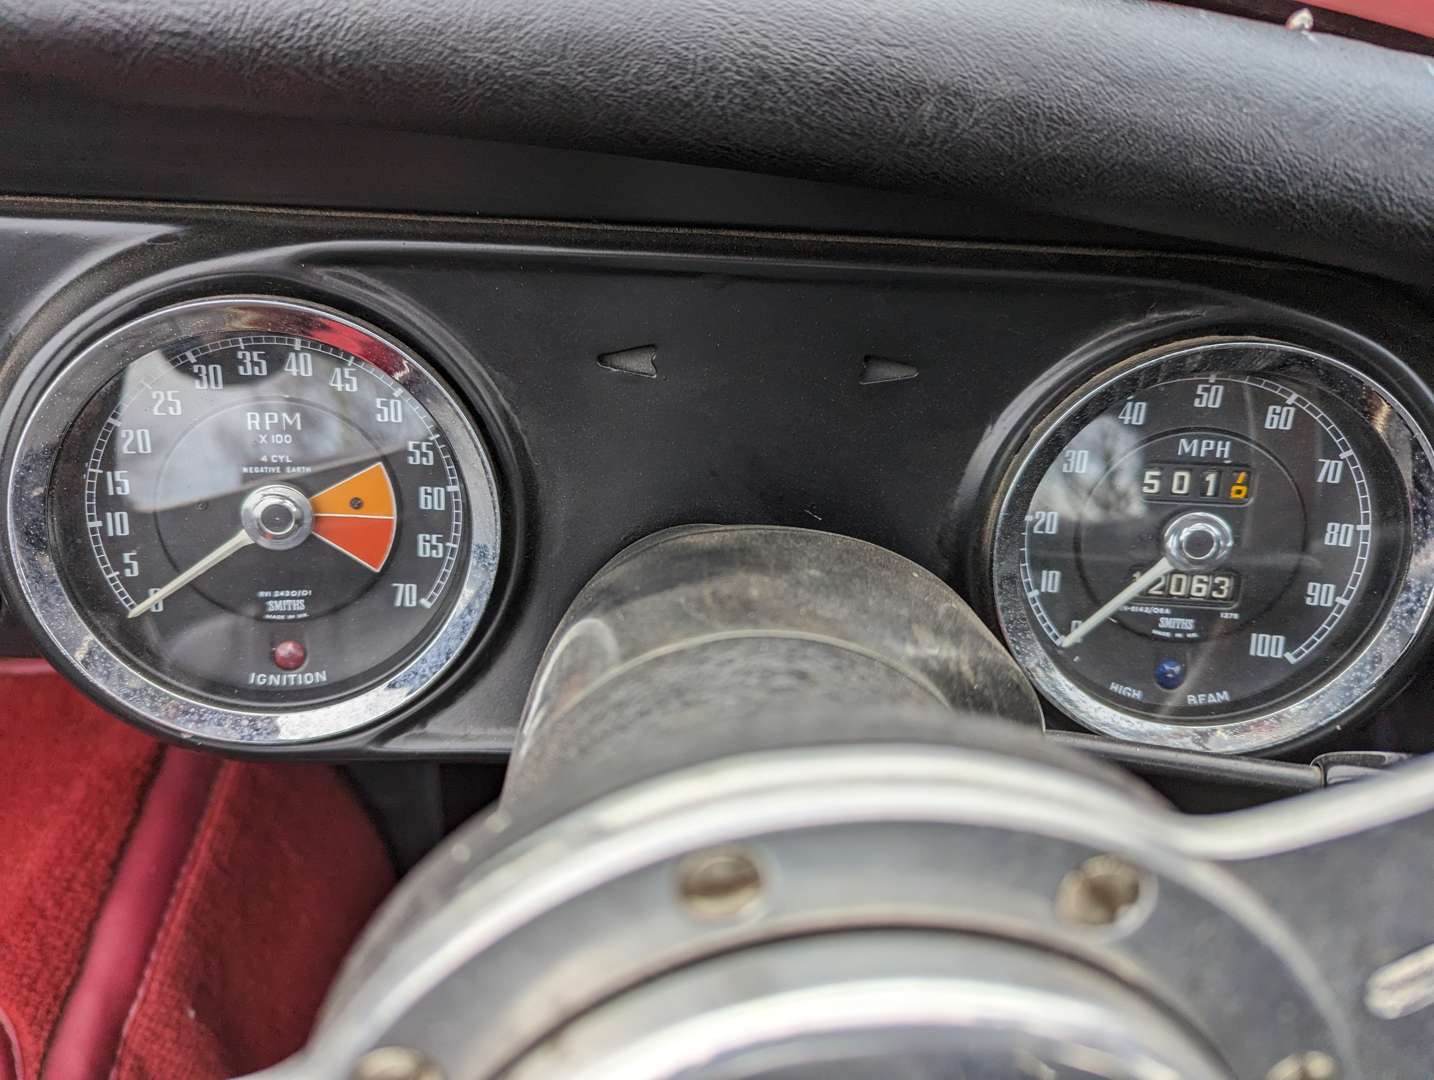 <p>1975 MG MIDGET 1500</p>